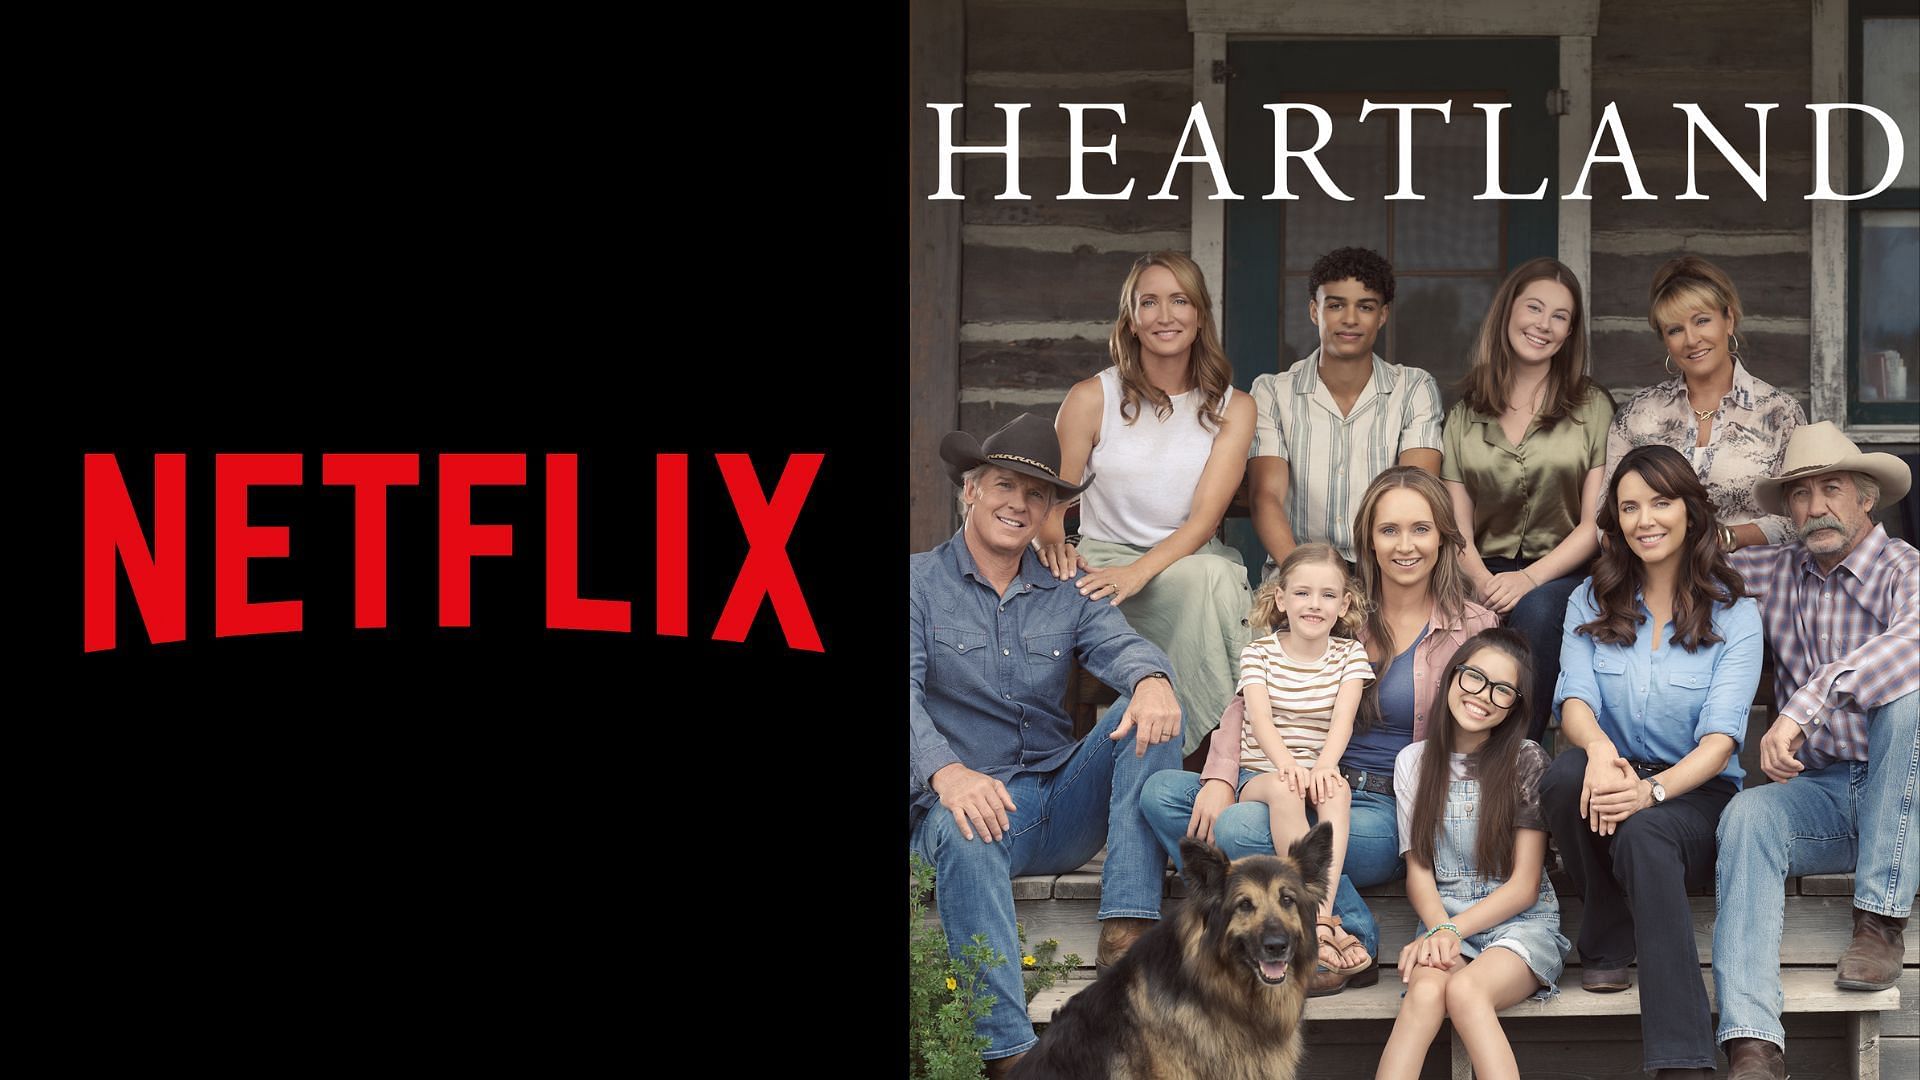 Heartland is currently airing season 17. (Photos via Prime)